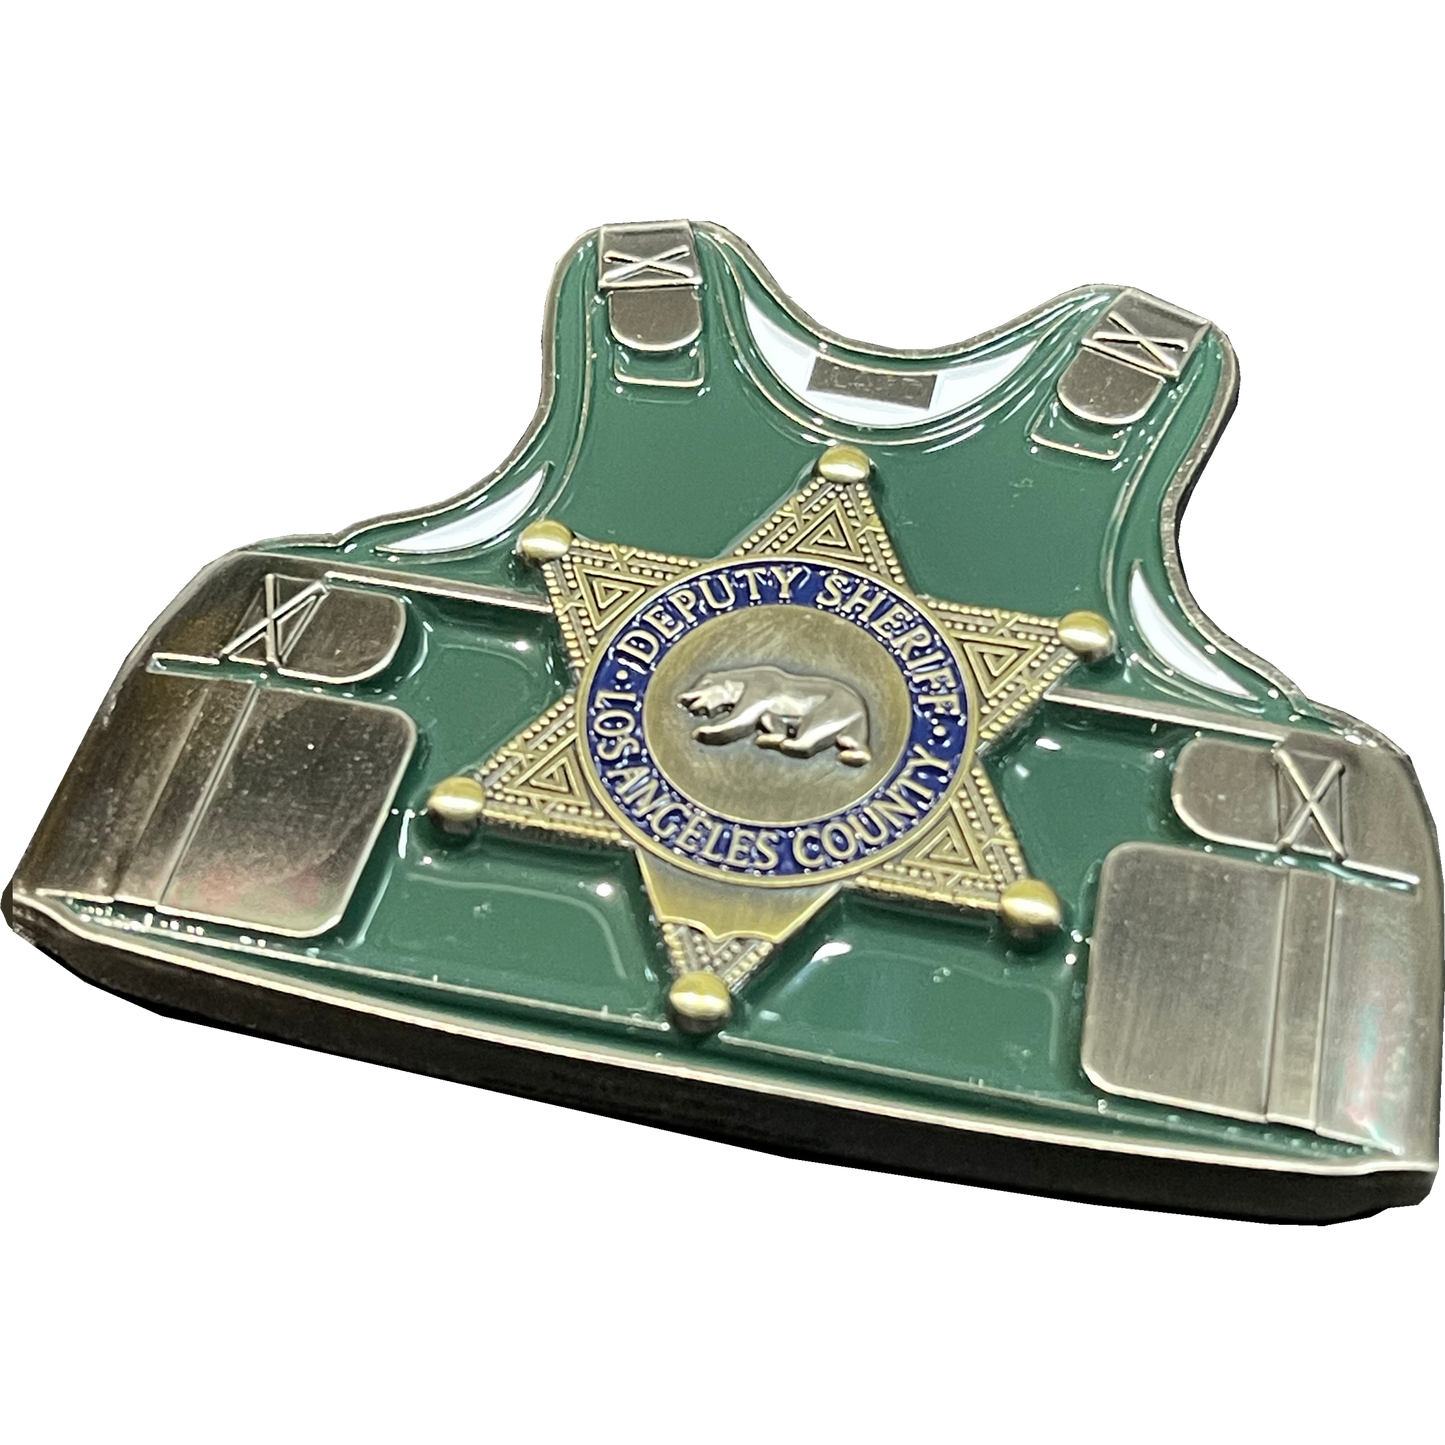 BL11-006 Los Angeles County Deputy Sheriff Body Armor LASD Challenge Coin LA Sheriff's Department